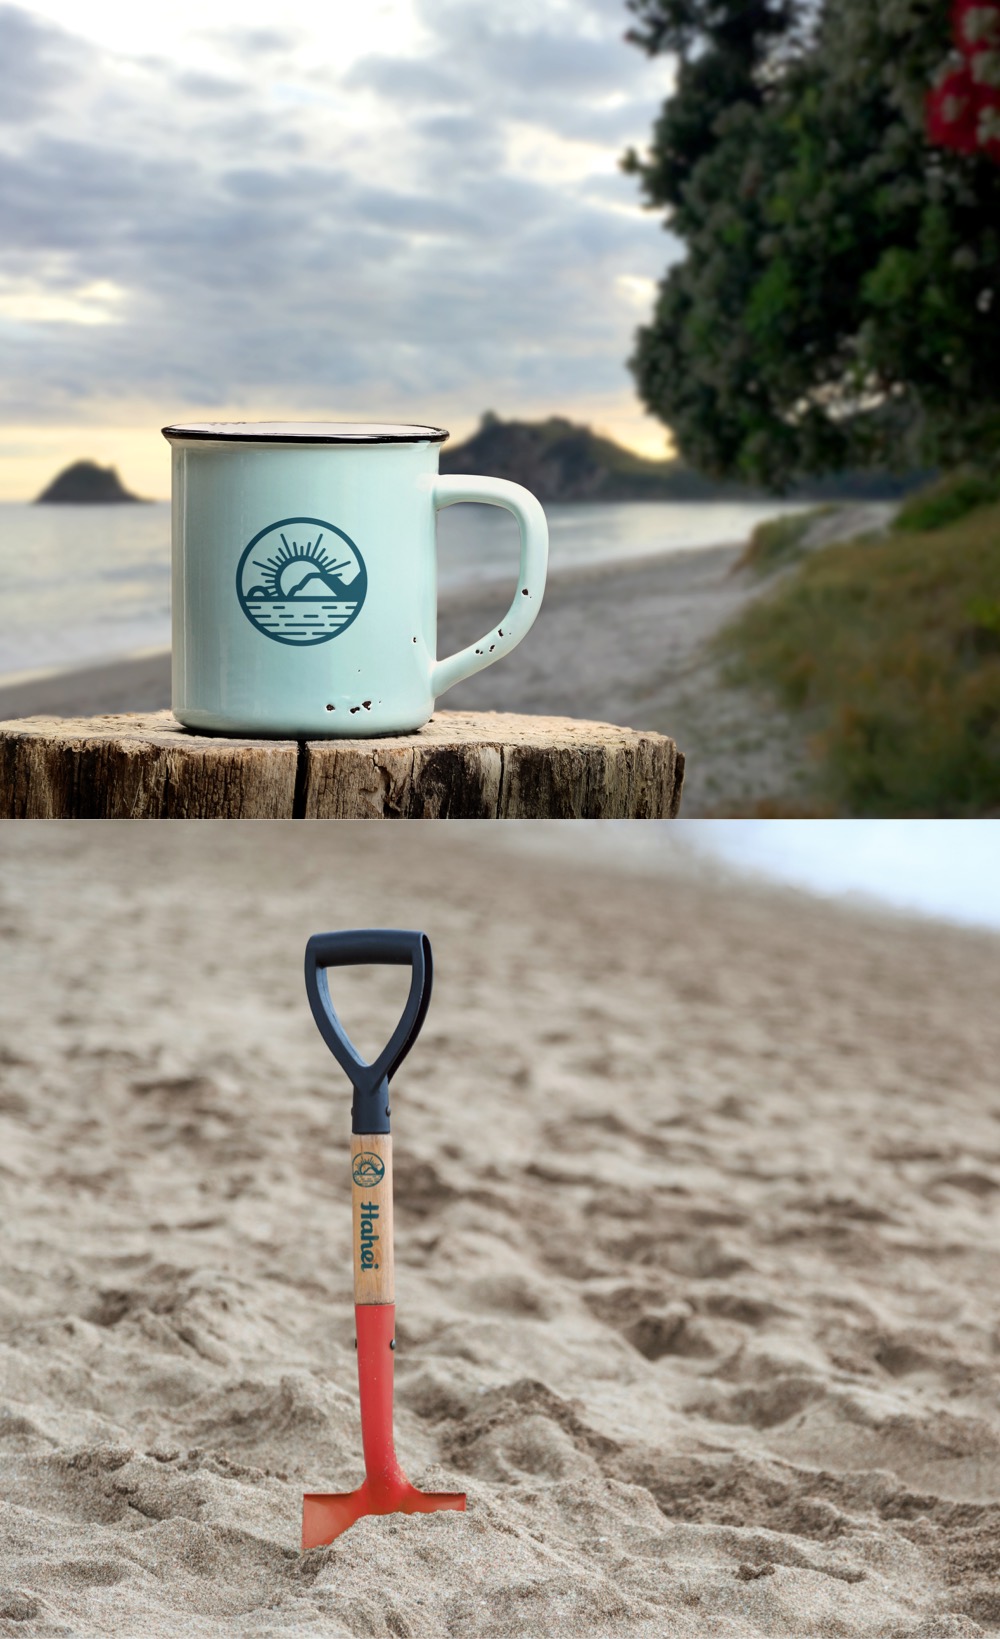 Hahei-logo-cup-and-shovel